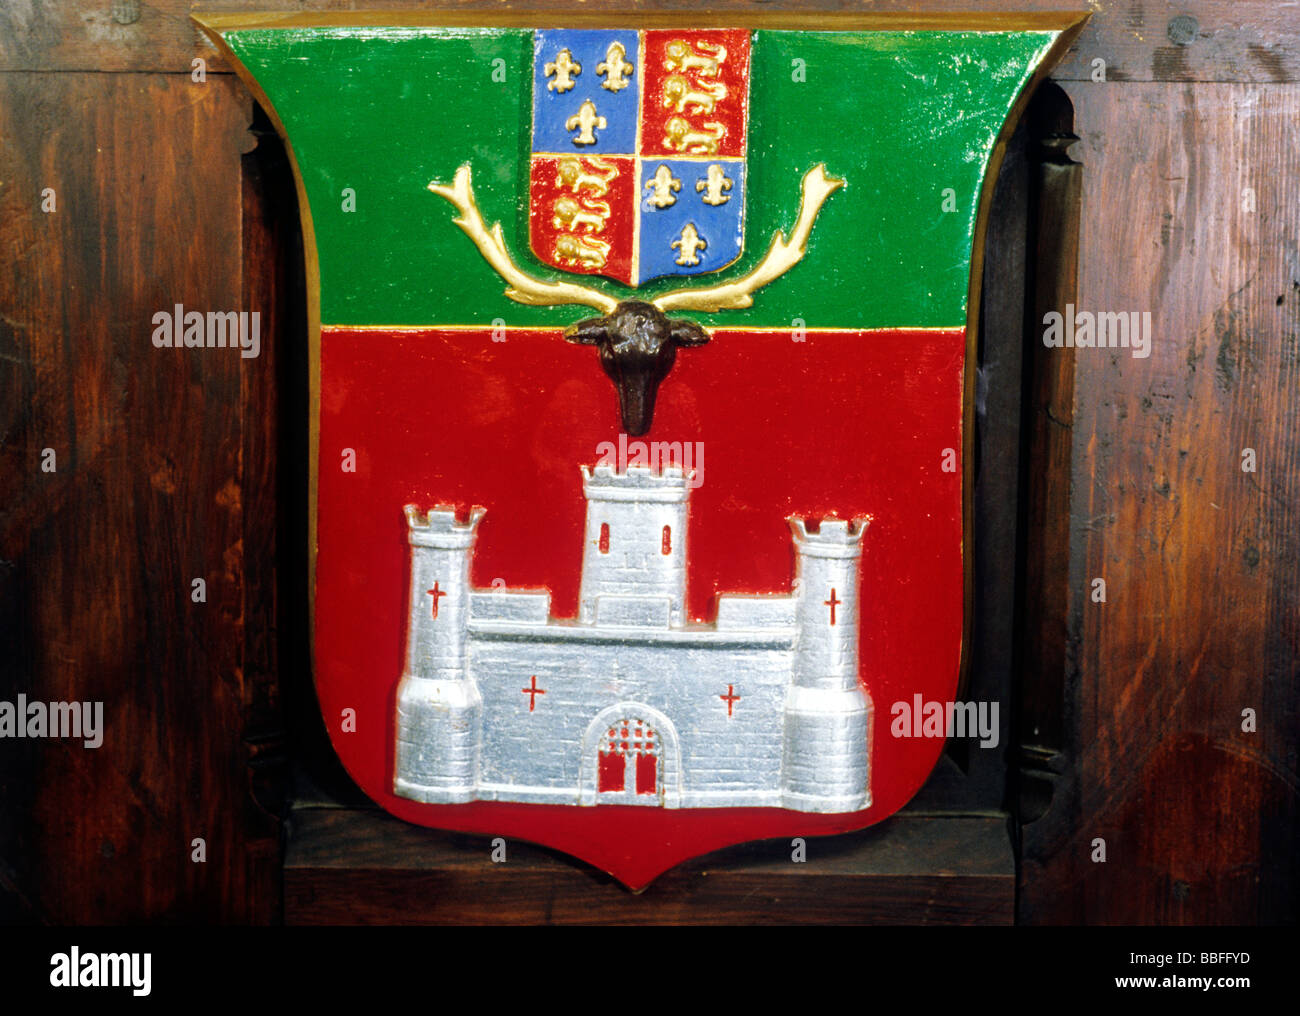 Windsor town coat of arms on church pew Berkshire England UK heraldry heraldic shield Stock Photo